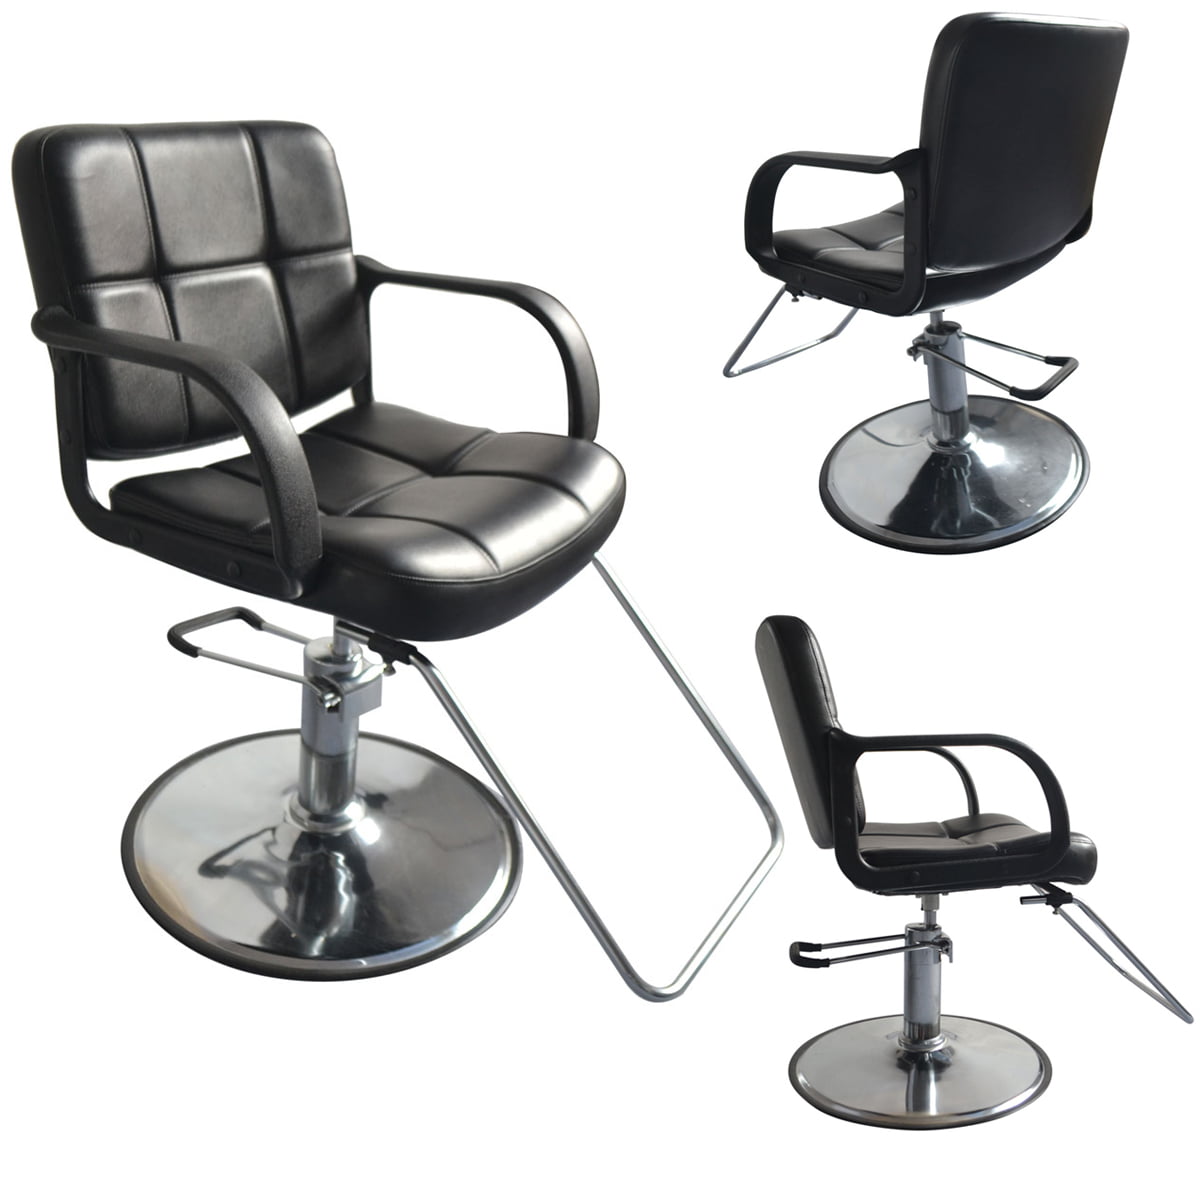 Zimtown Salon Barber Chair Adjustable Height Heavy Duty Beauty